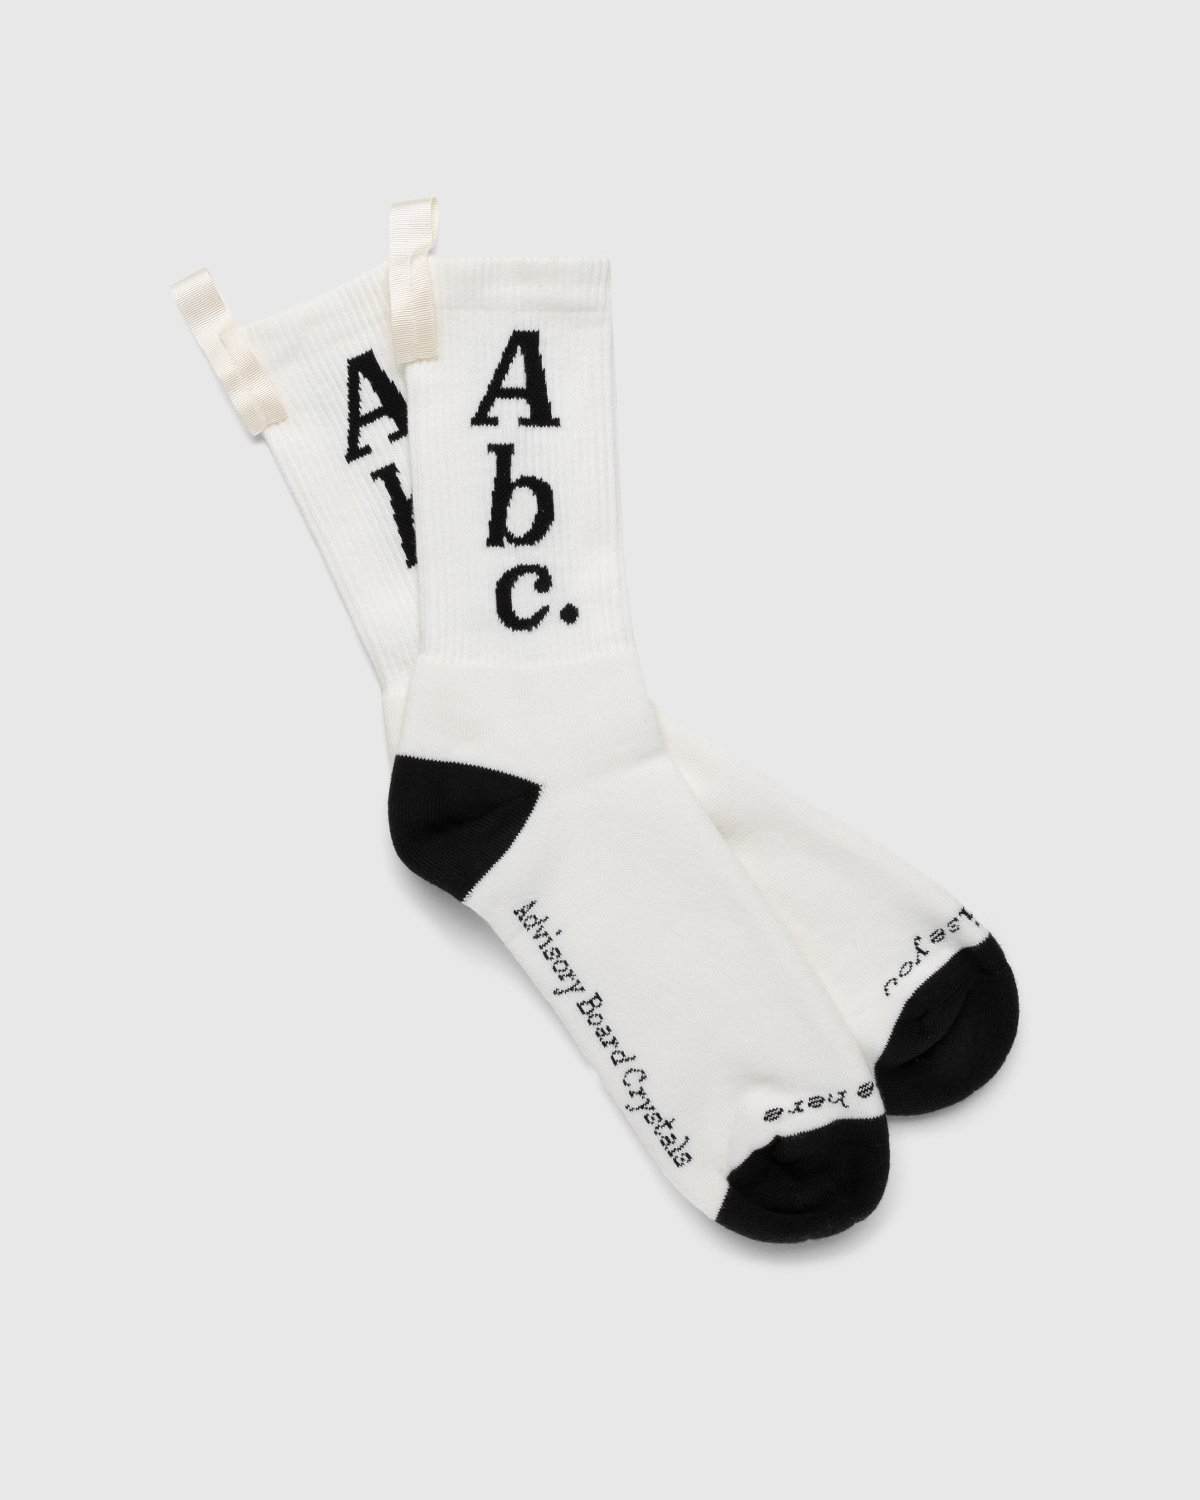 Abc. - Crew Socks Selenite/Anthracite - Accessories - White - Image 1